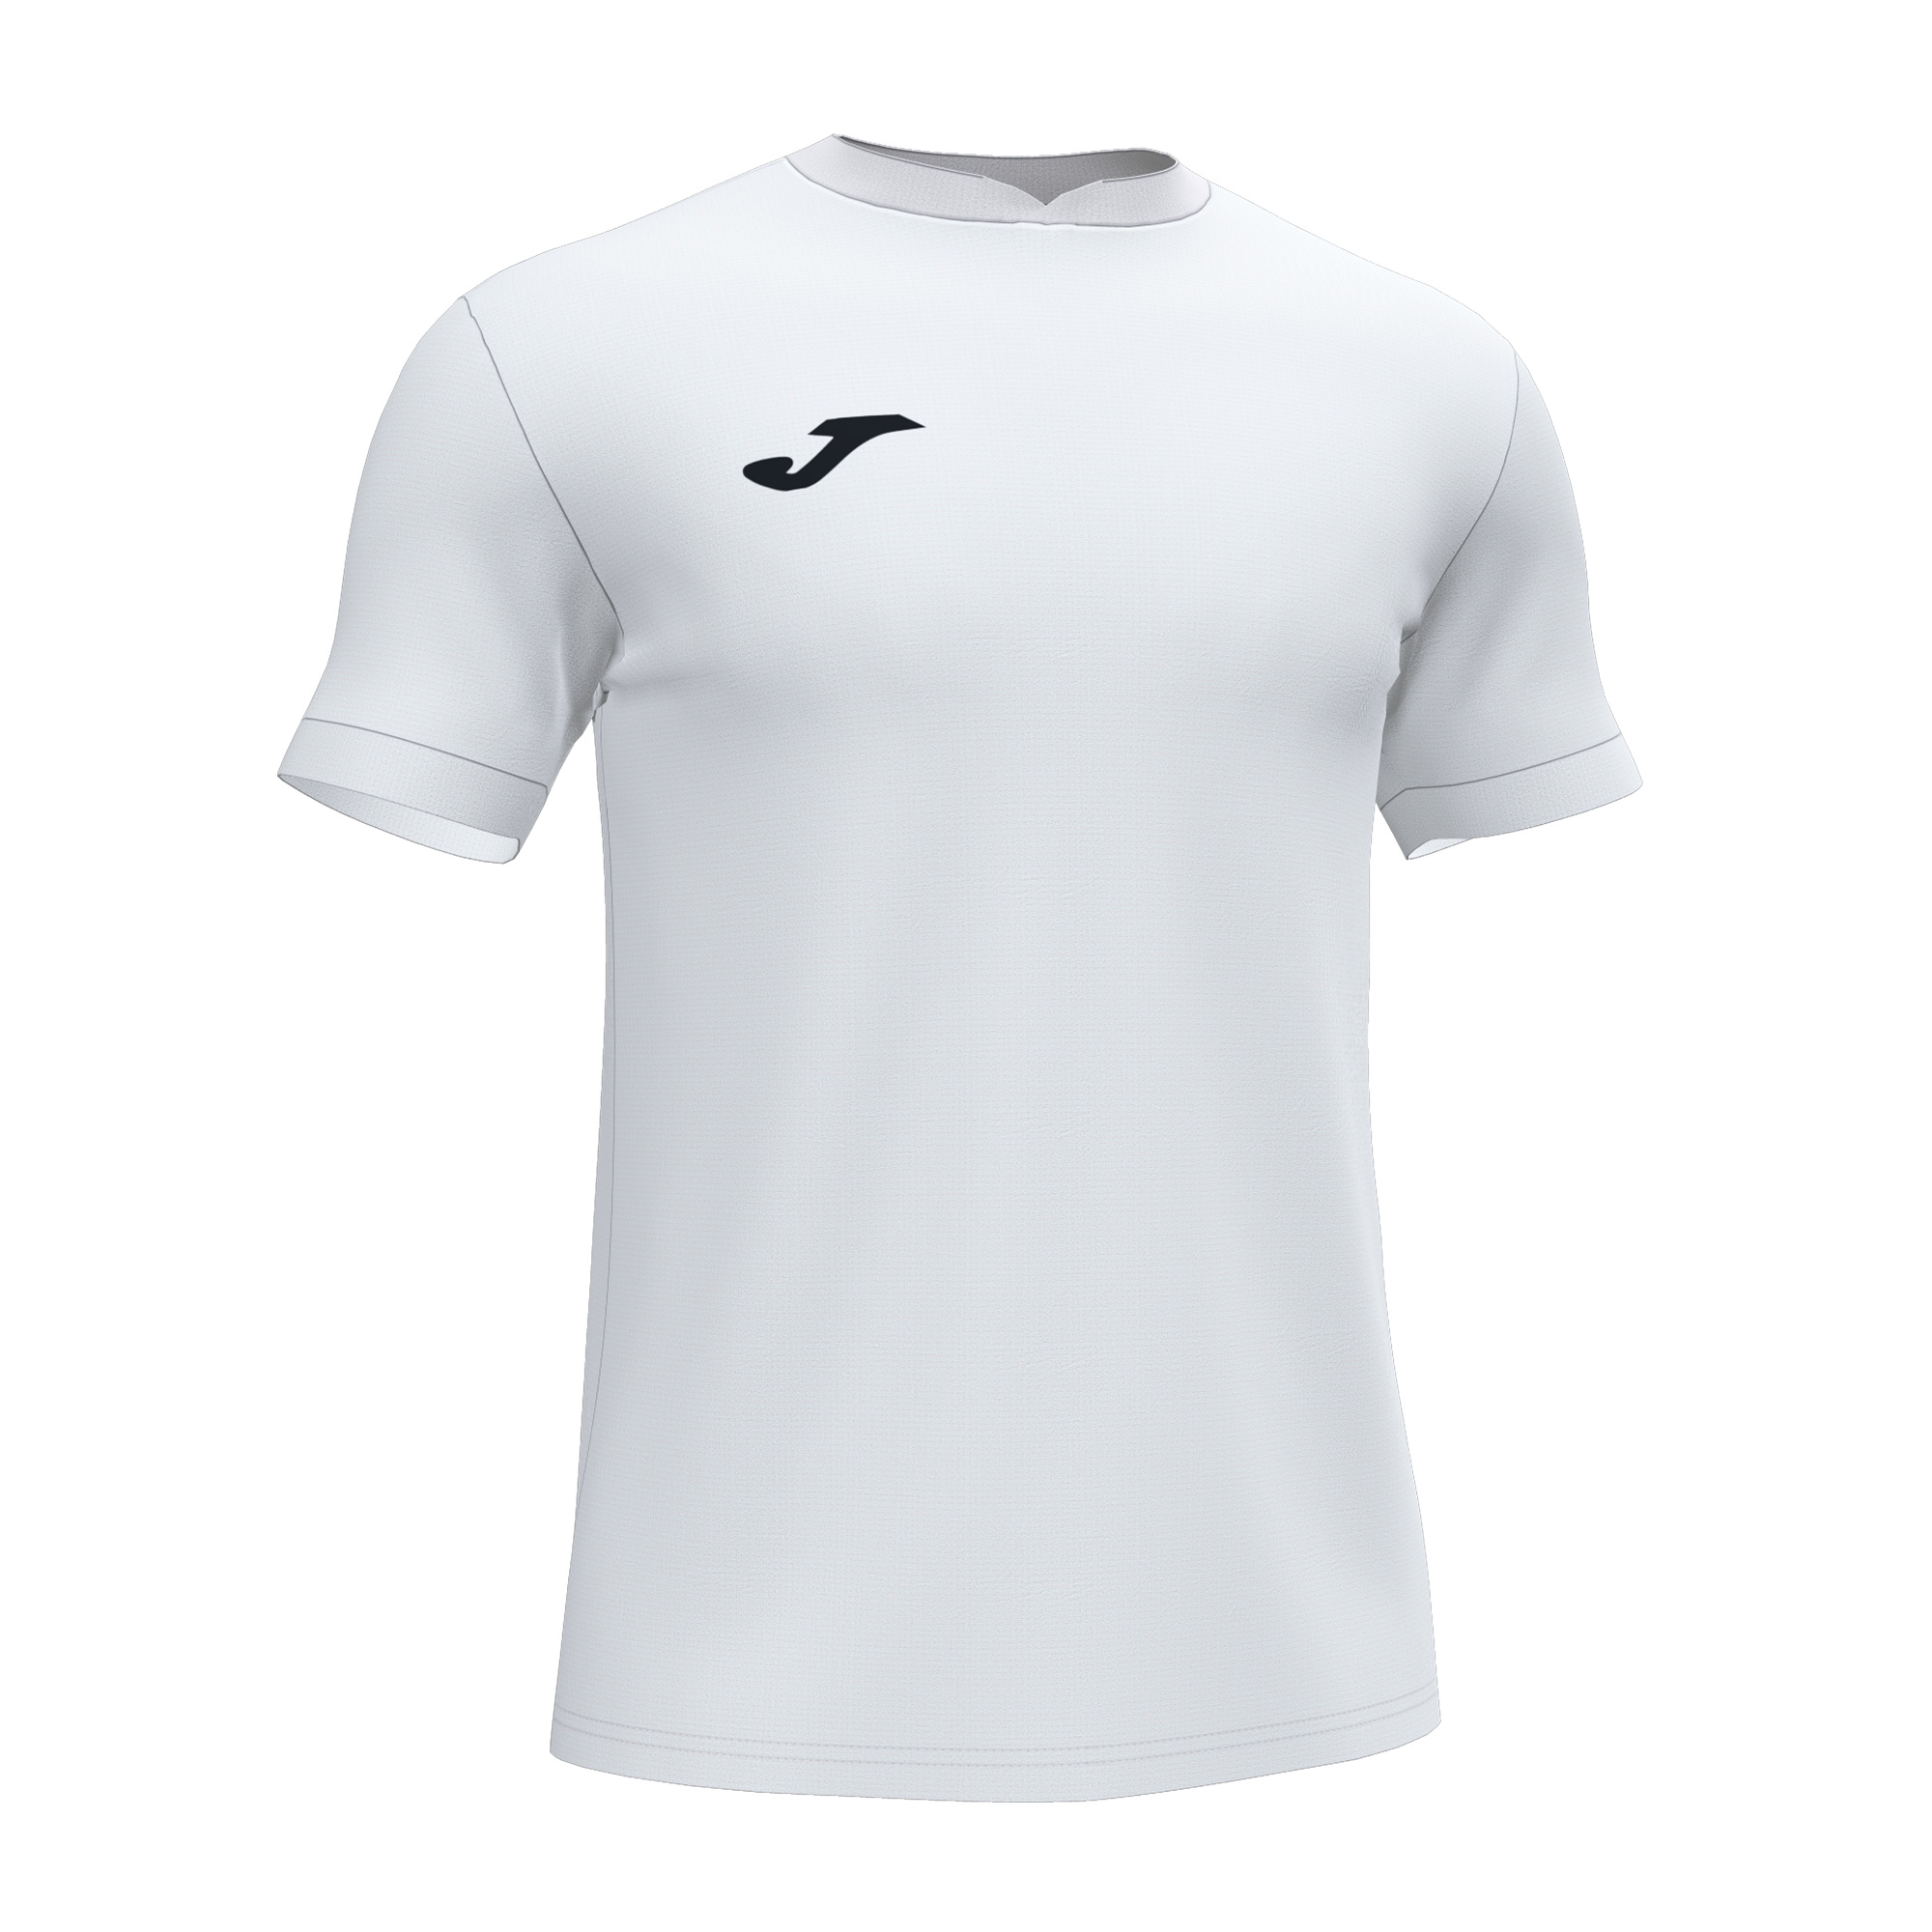 Joma Camiseta Brama Academy M/L Blanco - textil Tops y Camisetas